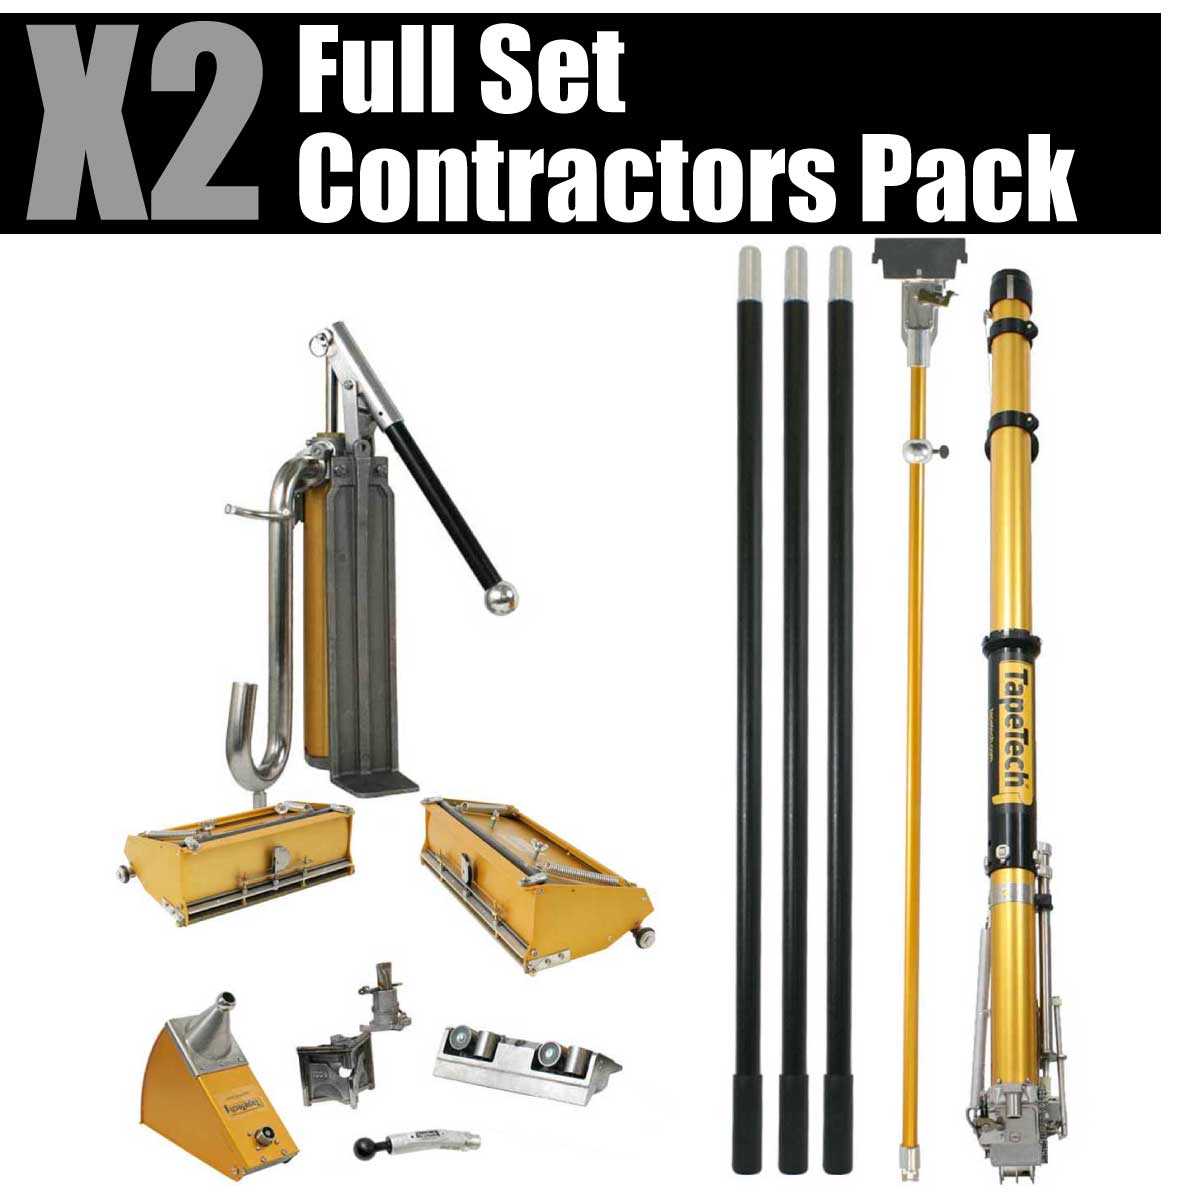 TapeTech Full Set X2 Contractors Pa